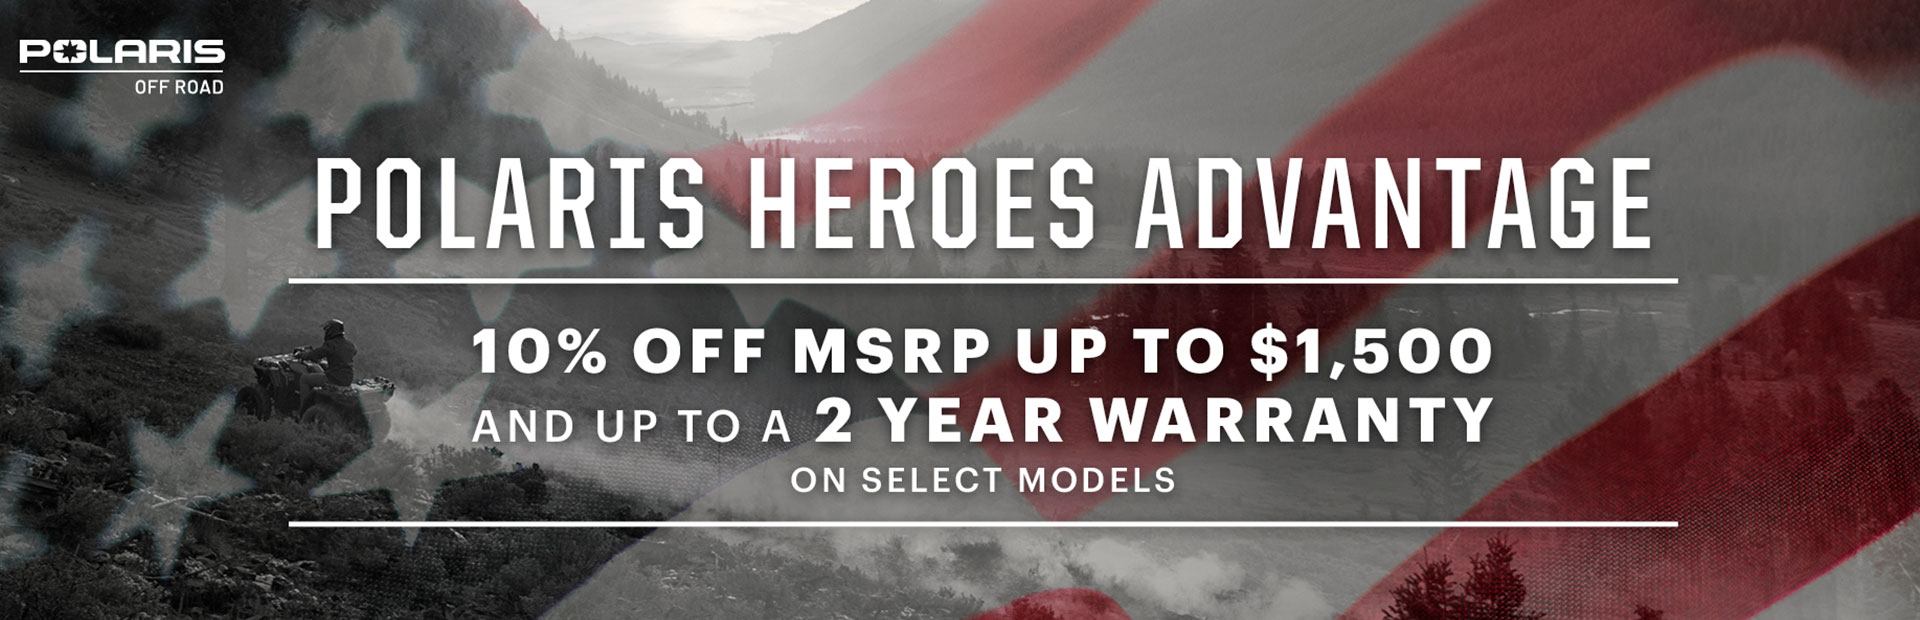 Polaris Promotion: 10% off MSRP on select models.